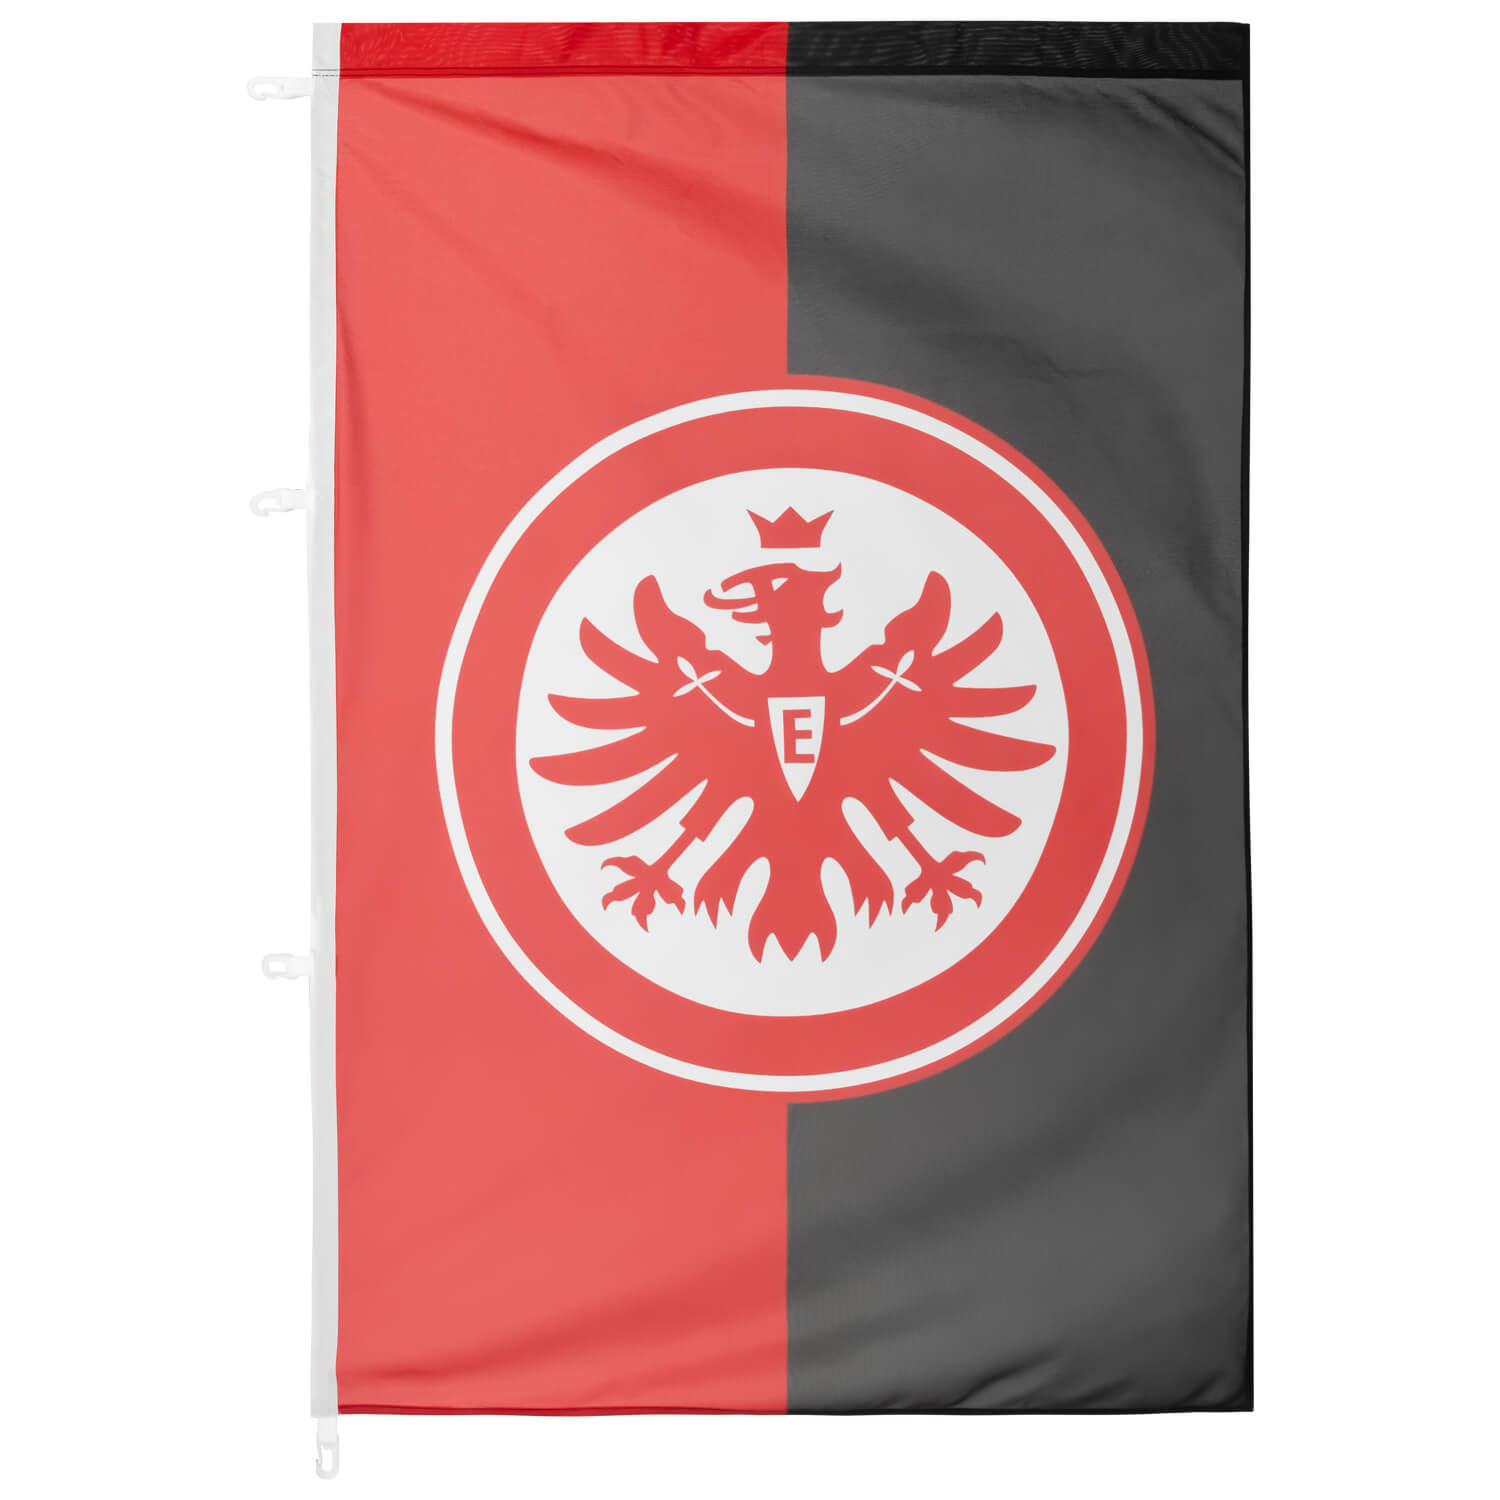 Bild 1: Hissfahne Logo rot/schwarz 100 x 150cm